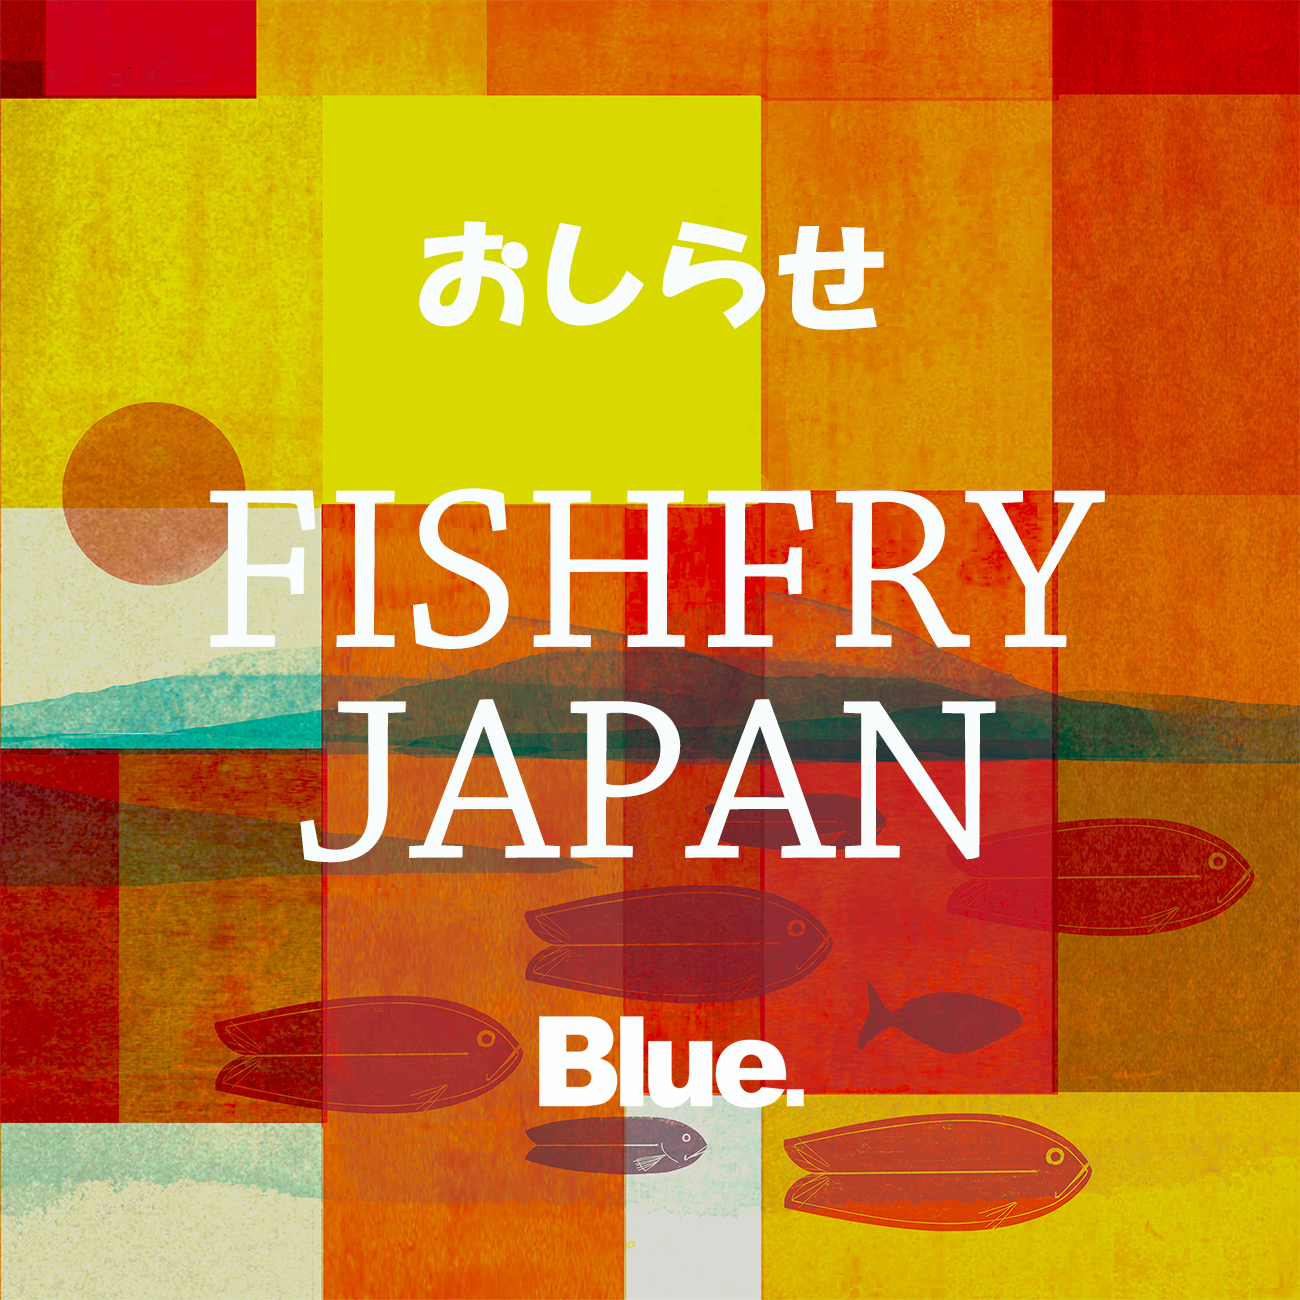 FISHFRY JAPANよりおしらせ。